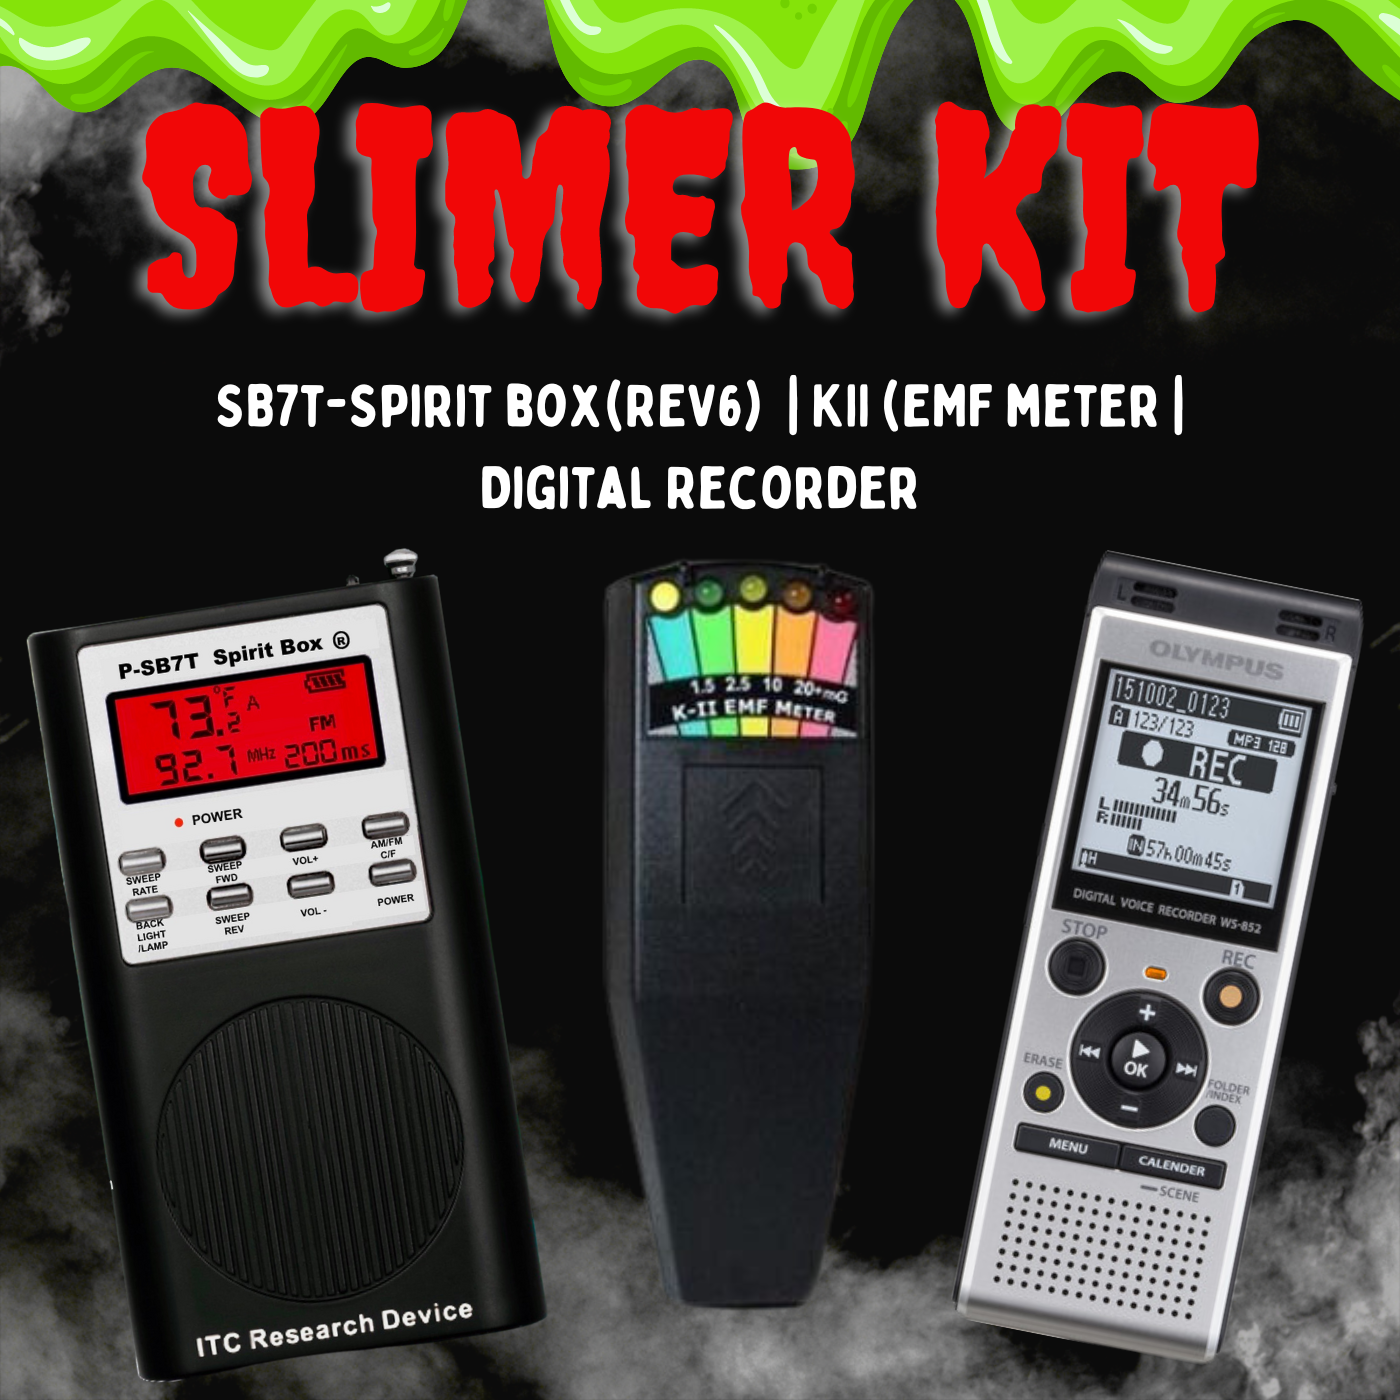 SLIMER kit Olympus EVP recorder (NEW MODEL), KII EMF meter, SB7T